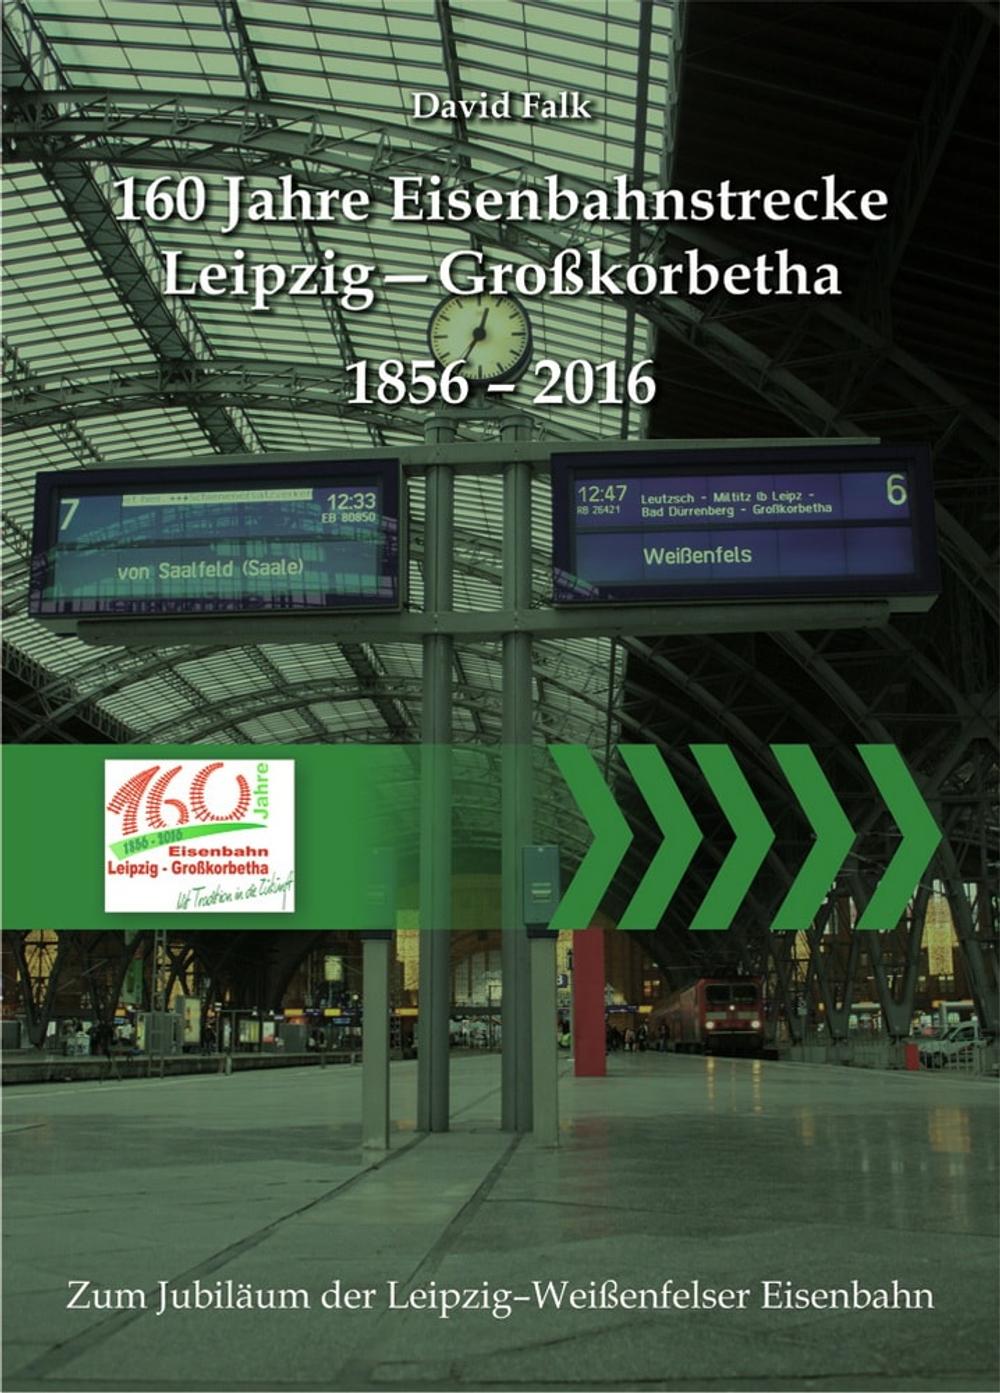 Cover Buch "160 Jahre Eisenbahnstrecke Leipzig- Großkorbetha"